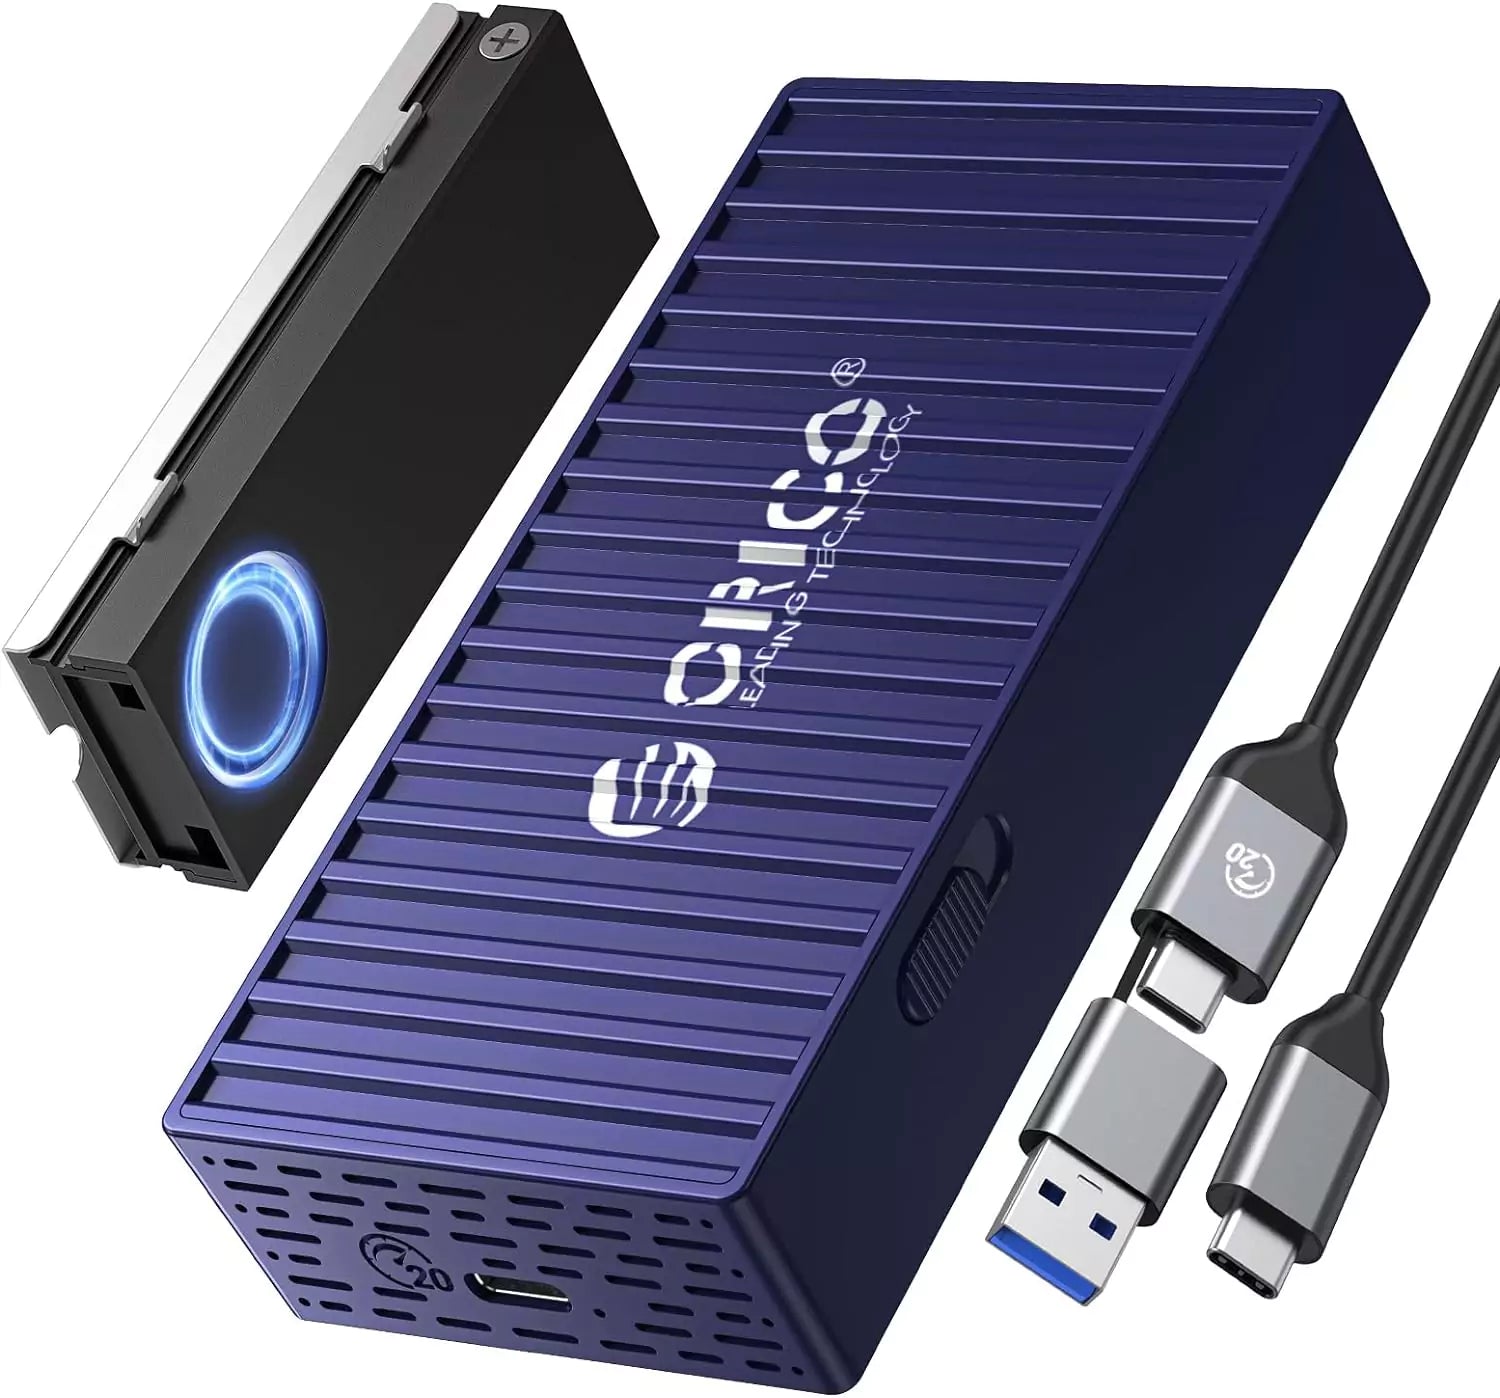 ORICO 20Gbps M2 NVME SSD Case All Aluminum M.2 NVMe SSD Enclosure USB3.2  GEN2